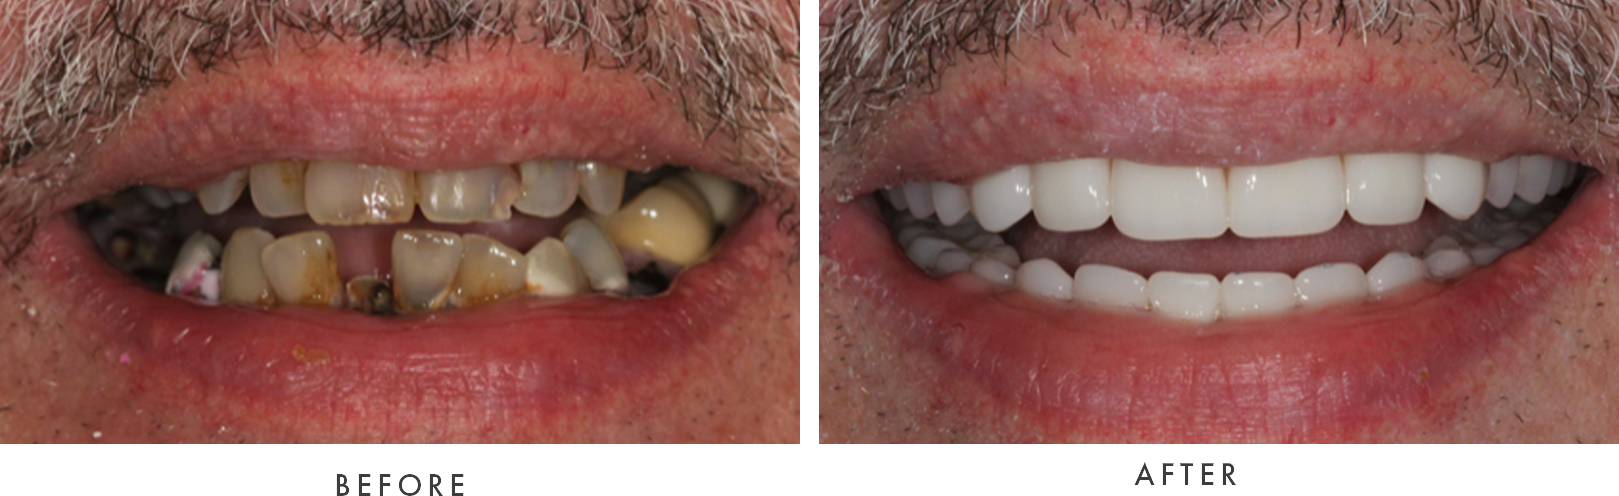 removable dentures combined case 1 drscruggs